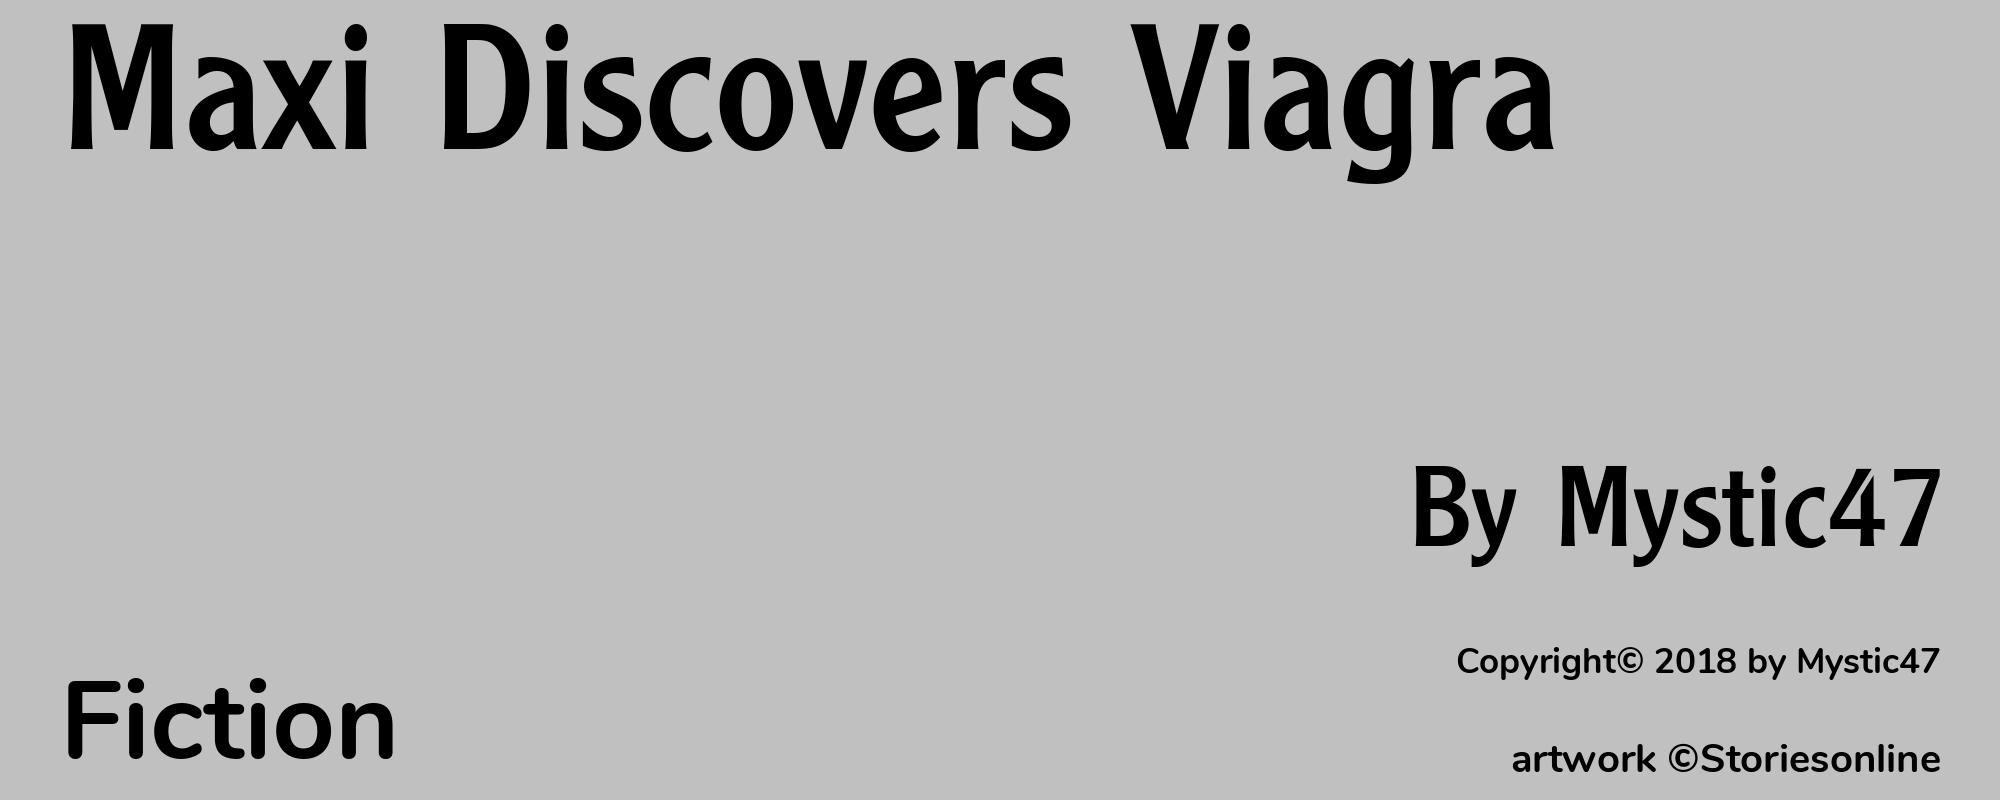 Maxi Discovers Viagra - Cover